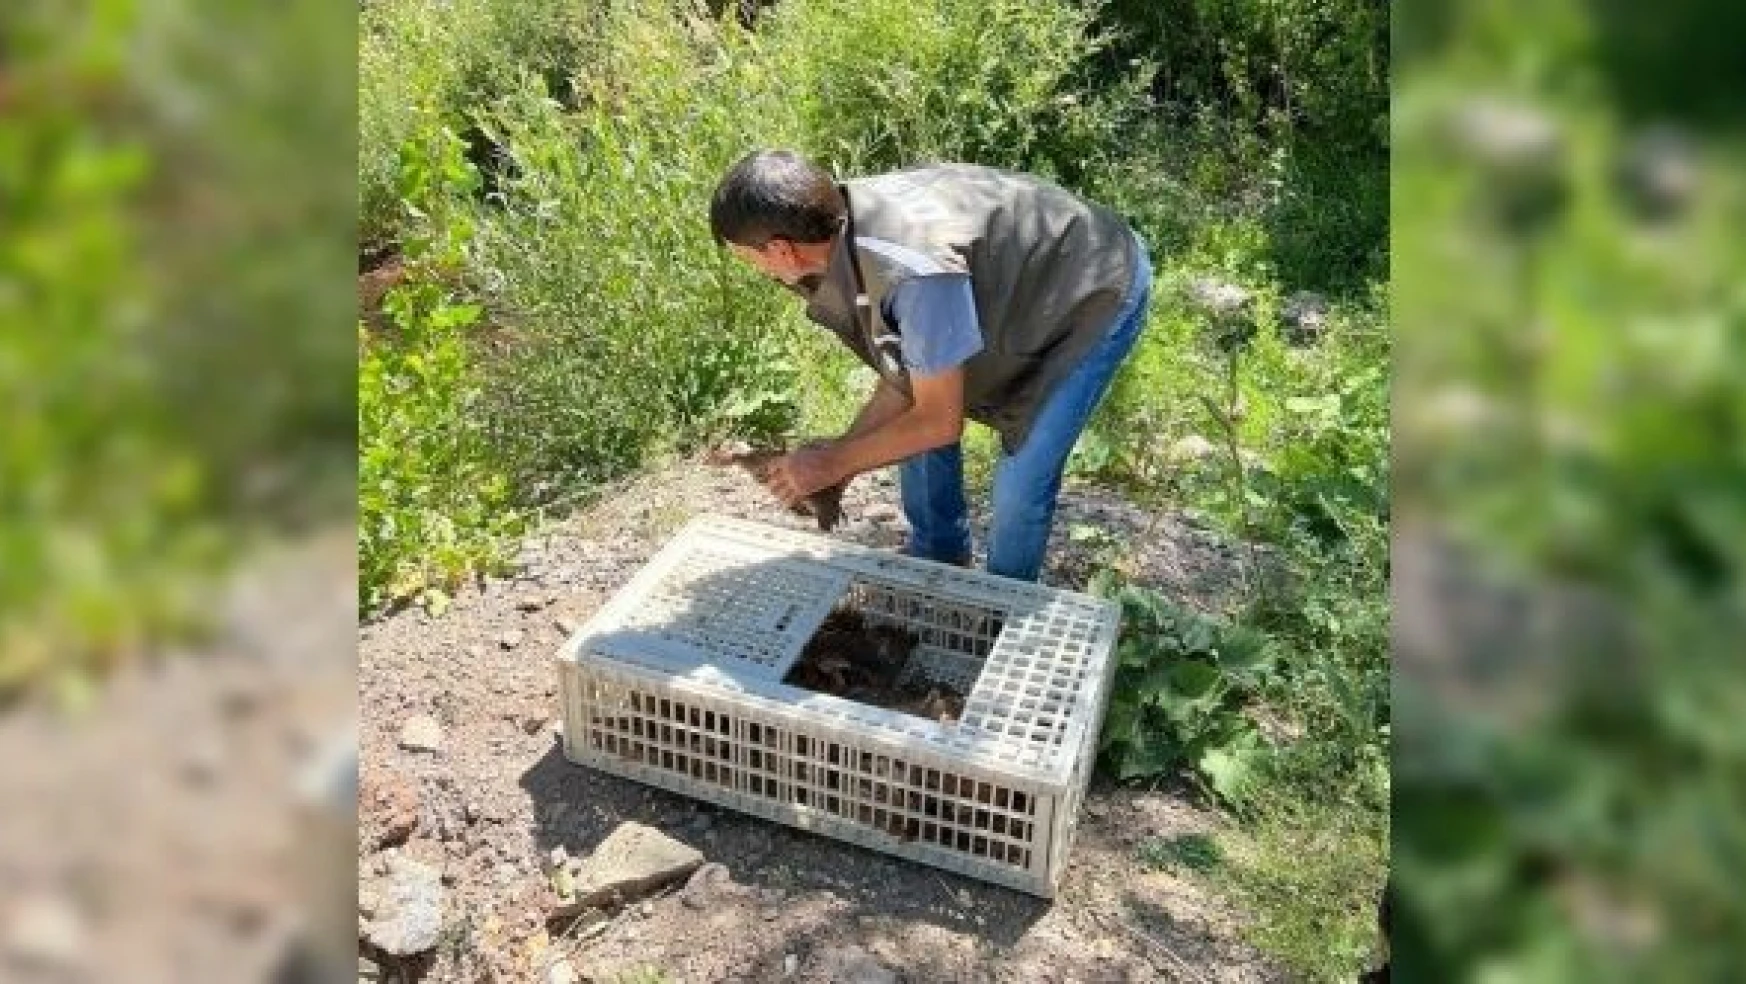 Bingöl'de doğaya 105 sülün salındı